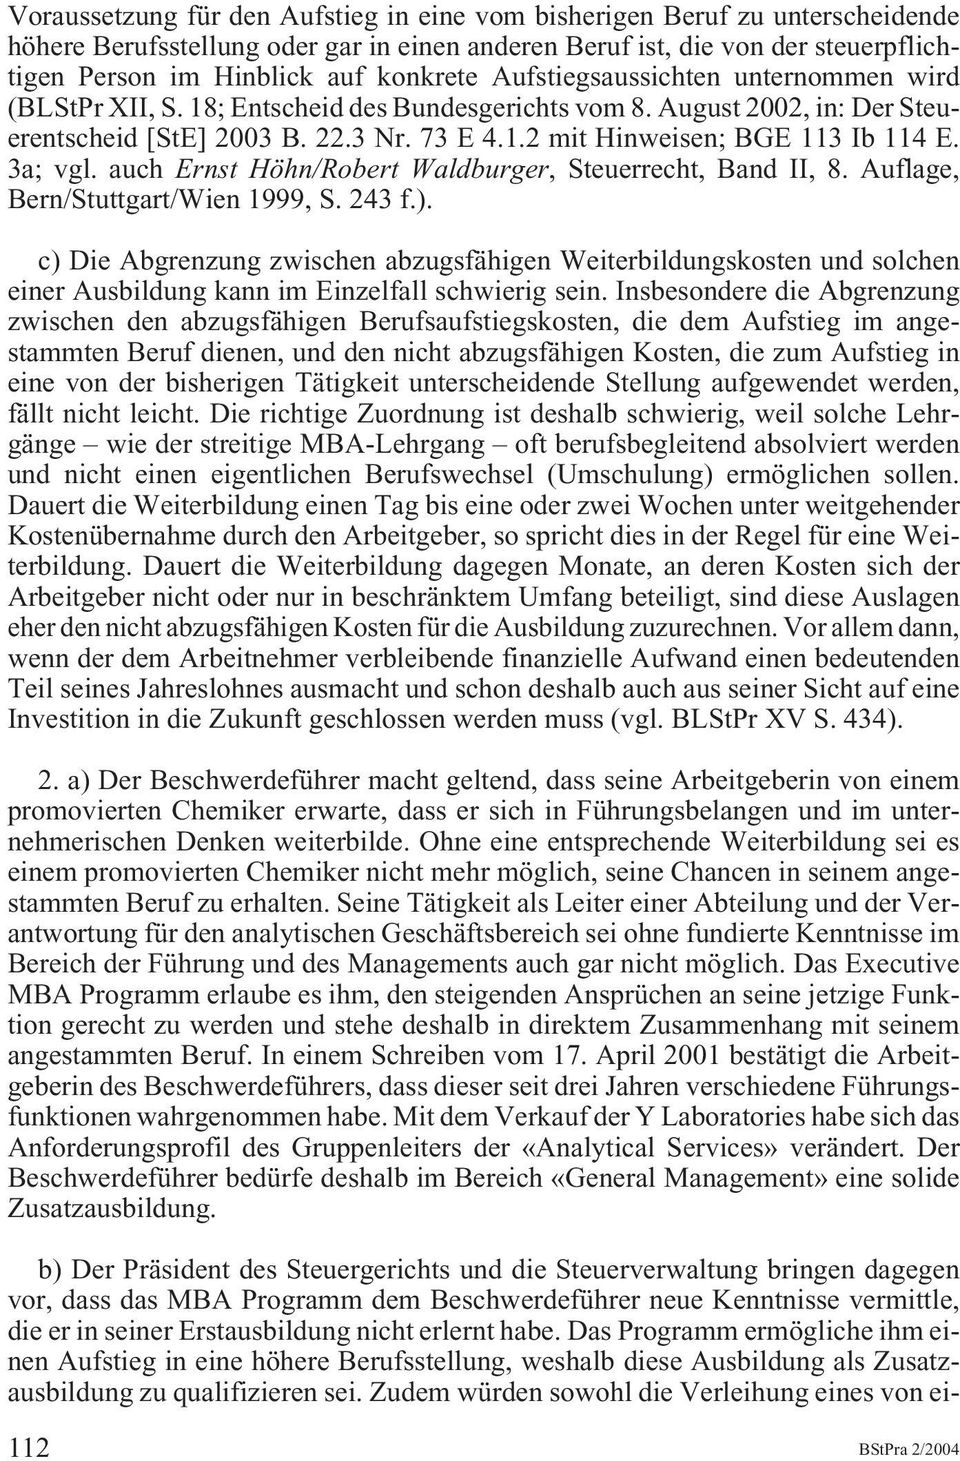 3a; vgl. auch Ernst Höhn/Robert Waldburger, Steuerrecht, Band II, 8. Auflage, Bern/Stuttgart/Wien 1999, S. 243 f.).